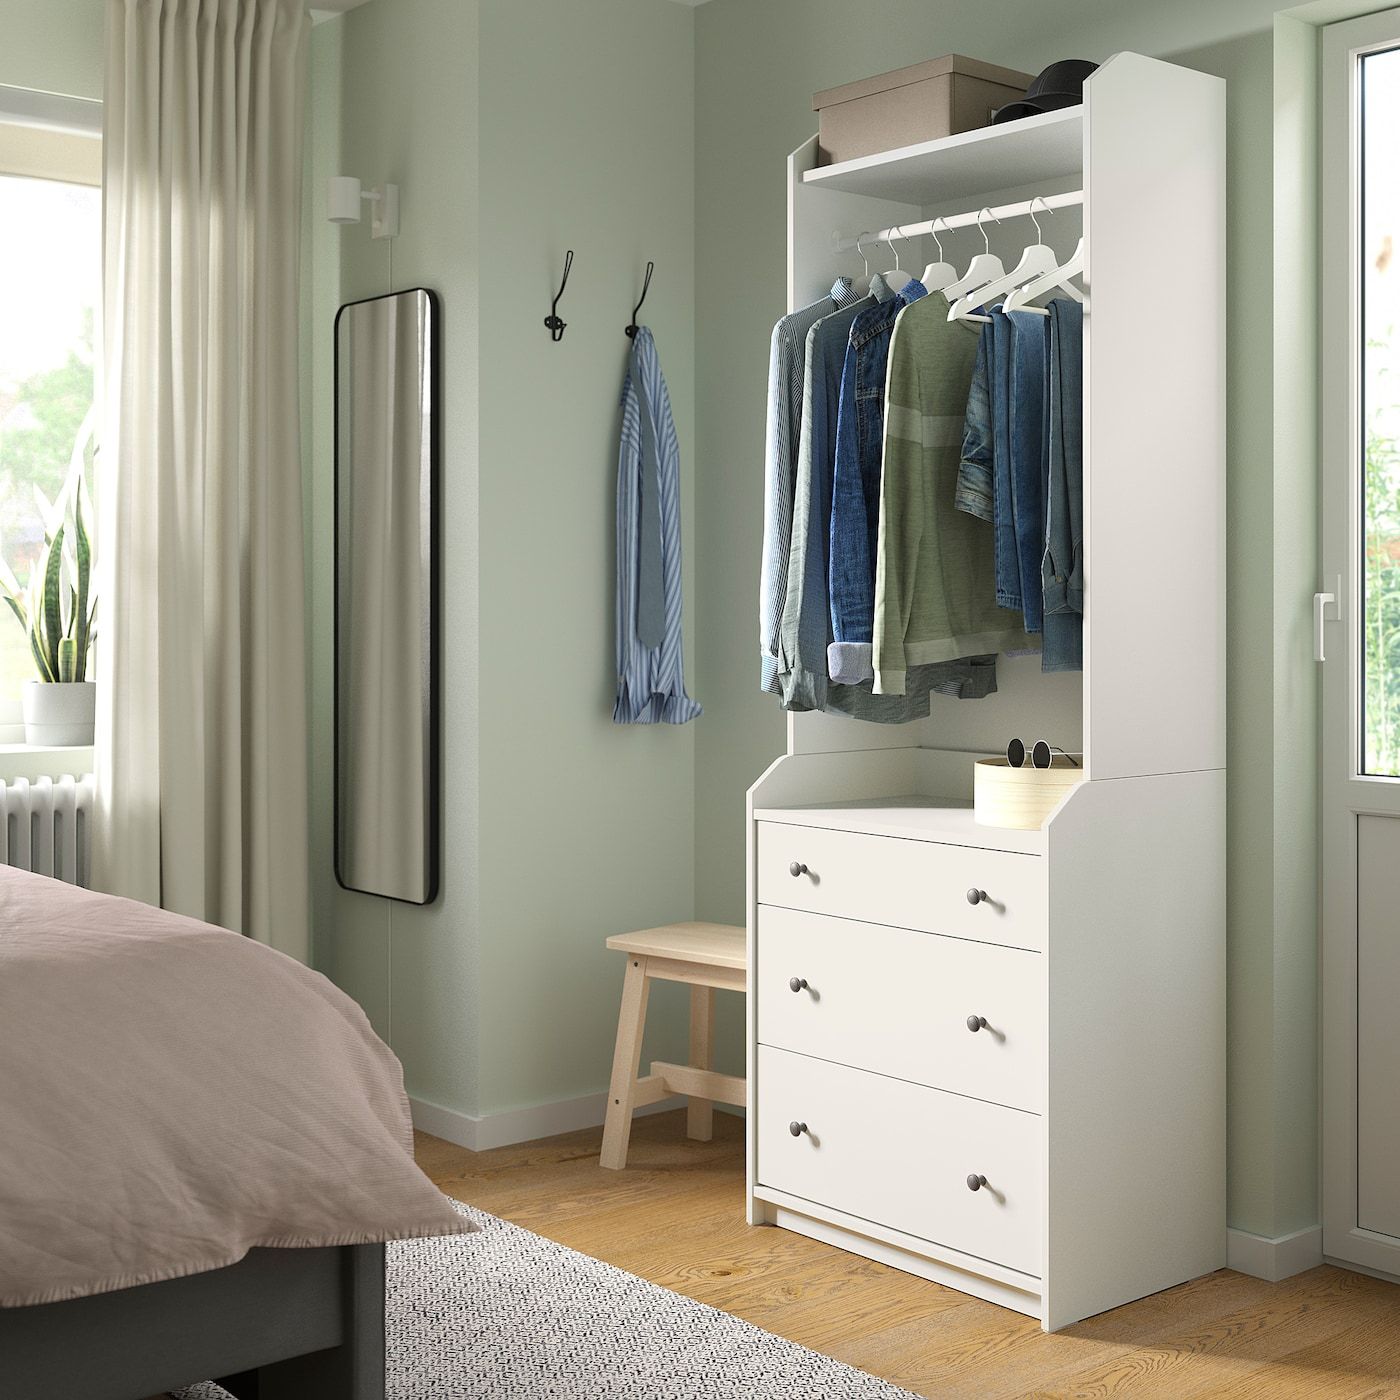 Hauga Open Wardrobe With 3 Drawers, White, 70x199 Cm – Ikea With Wardrobes With 3 Drawers (View 3 of 15)